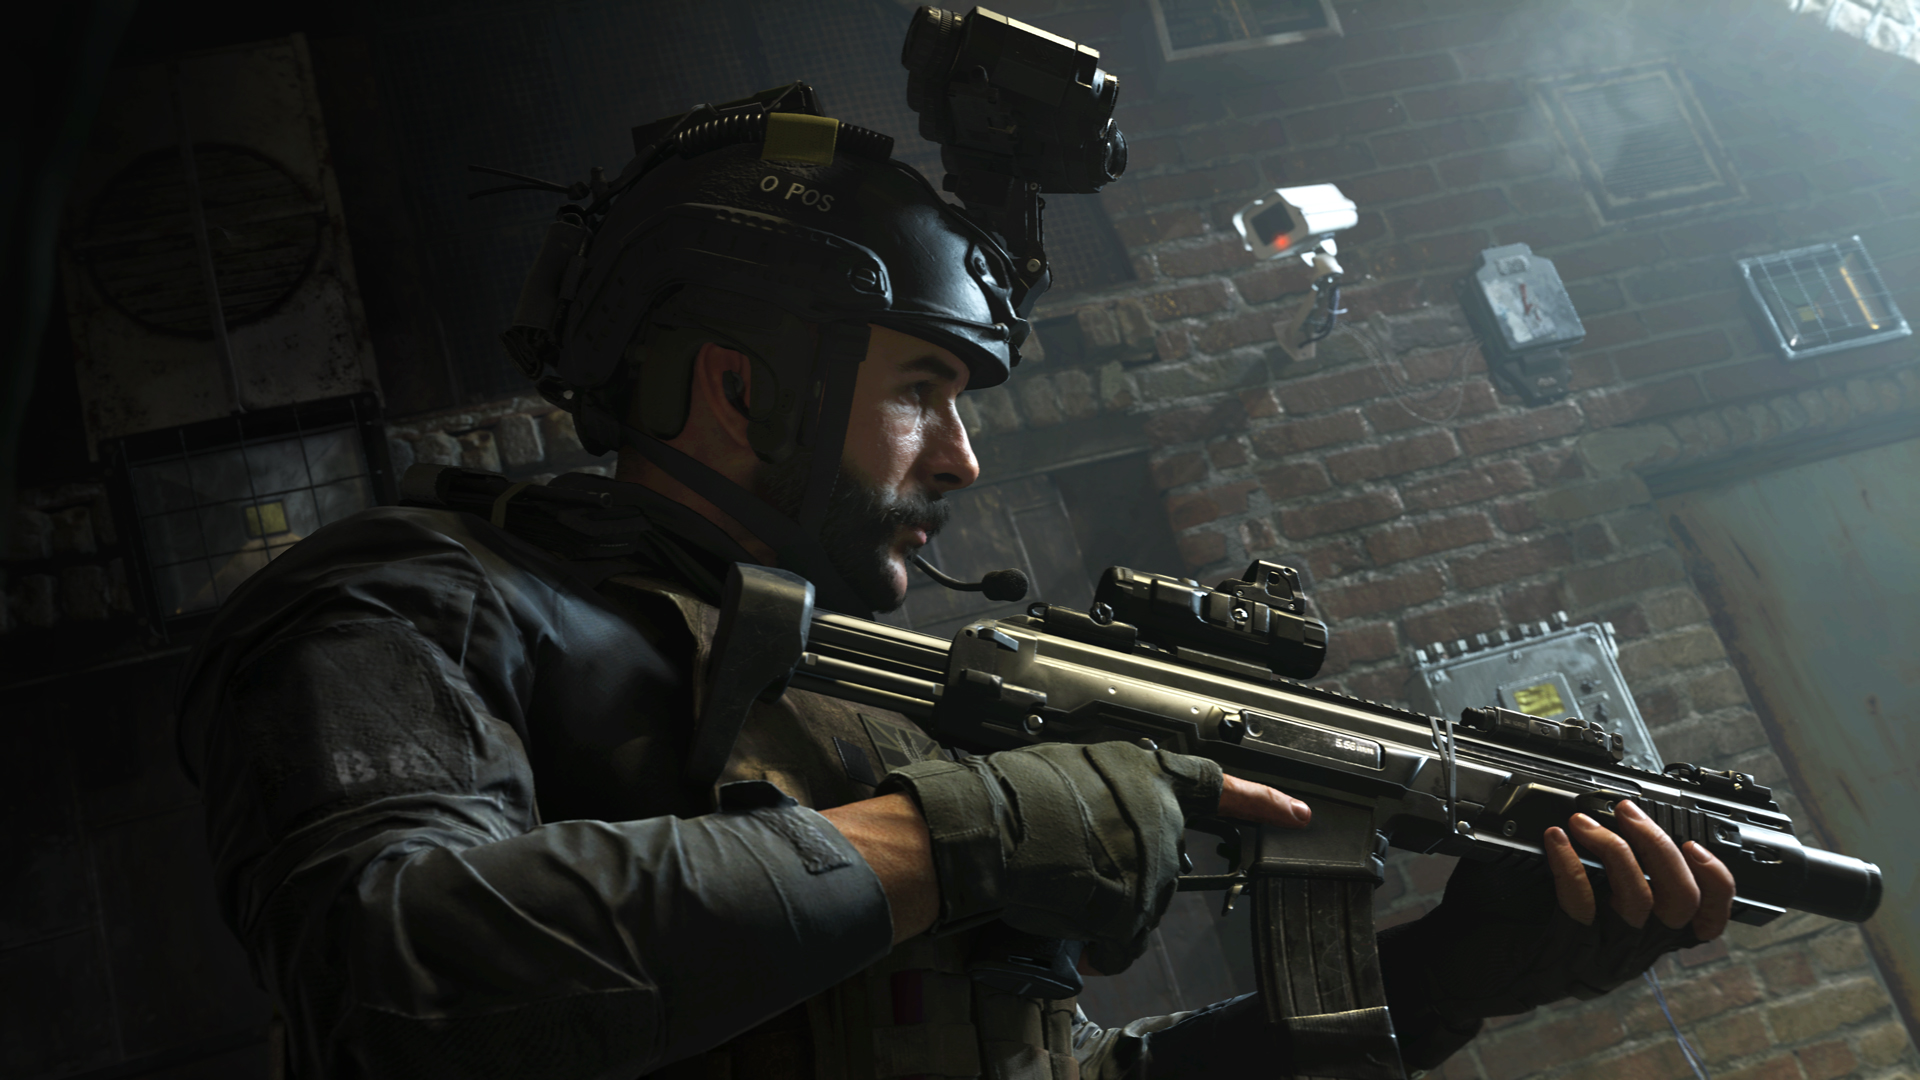 VGDB - Vídeo Game Data Base - Análise: Call of Duty - Modern